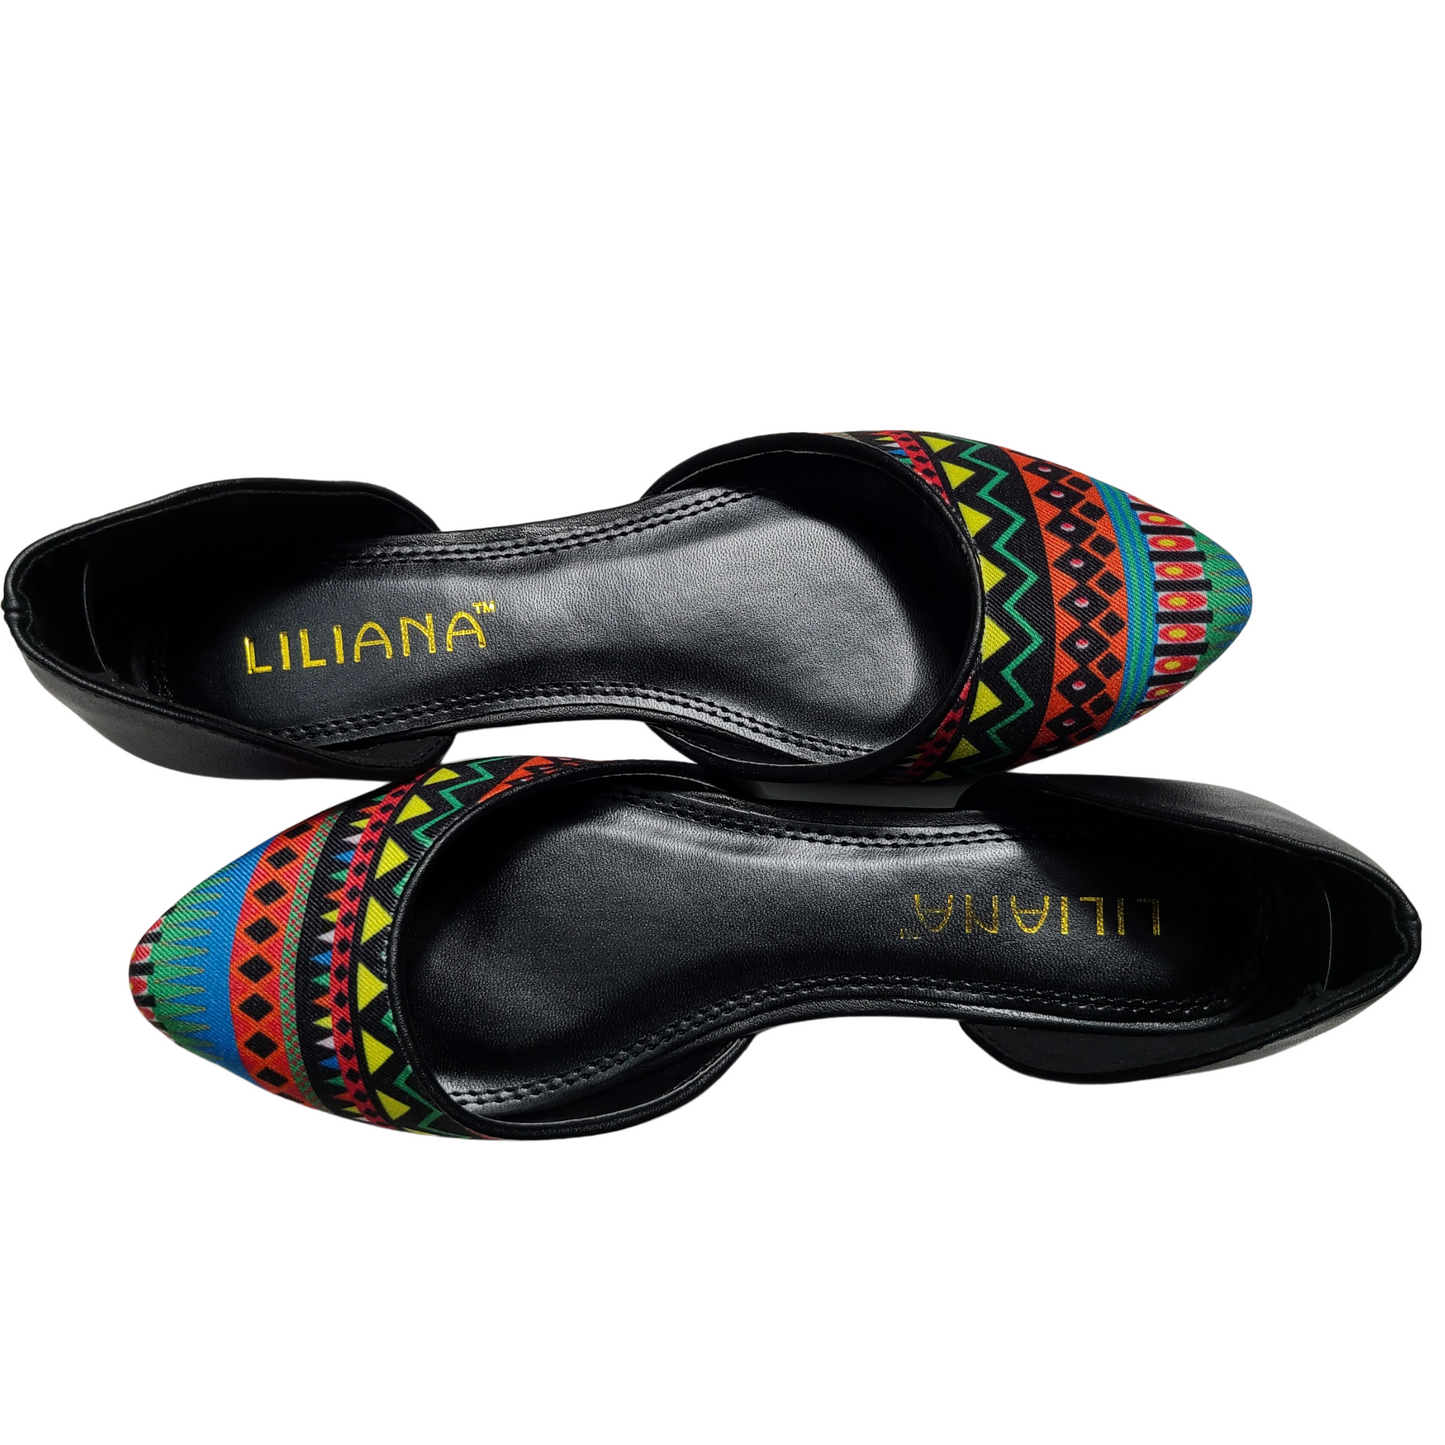 Suby Tribal Geometric Print Pointed Toe Flat Shoe - Didi Royale